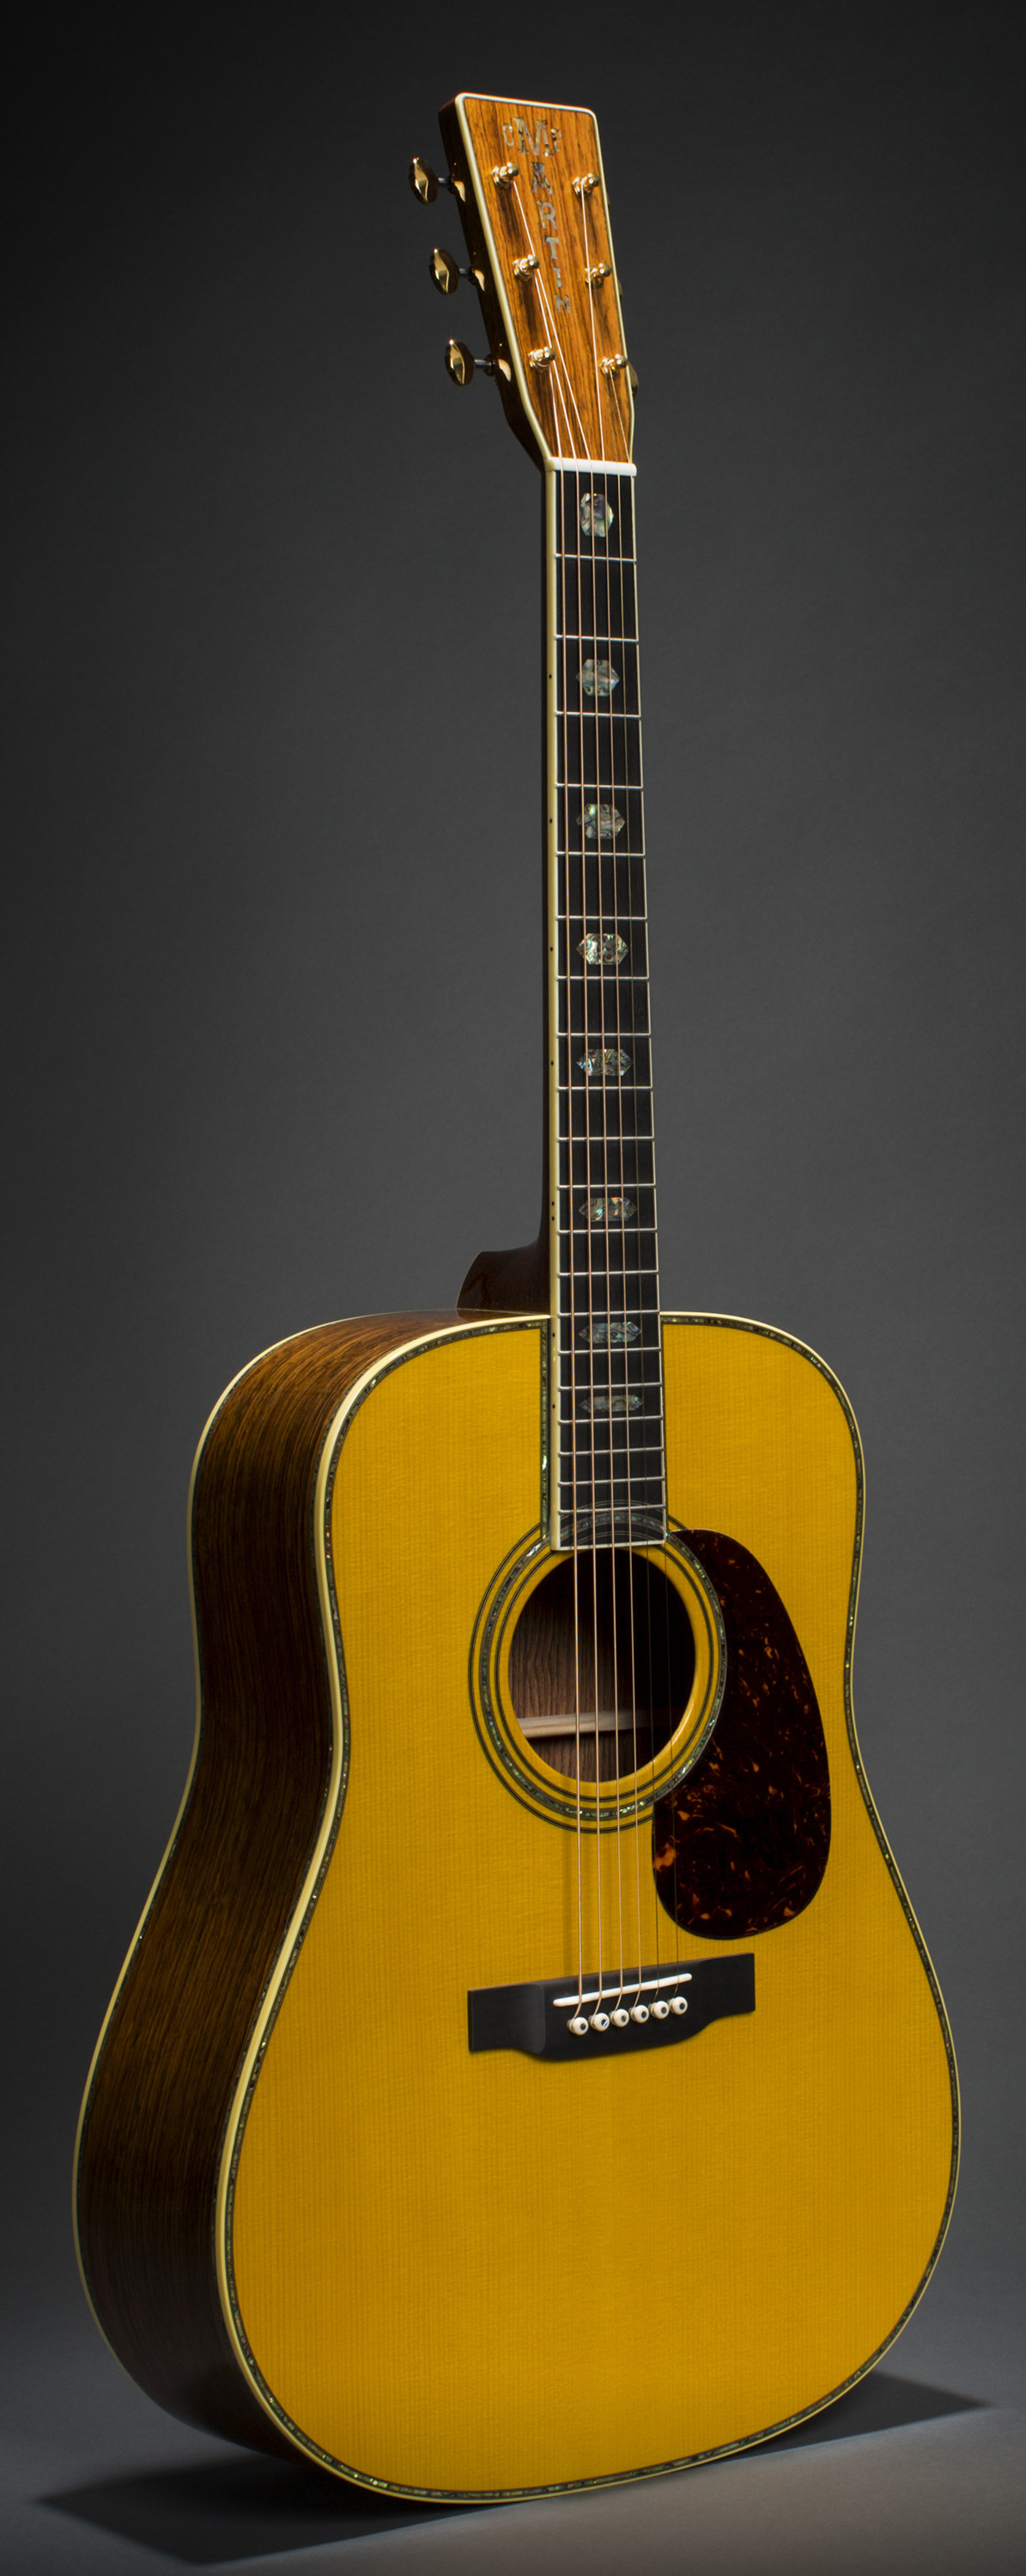 1195x3000 Martin D-45 John Mayer Guitar